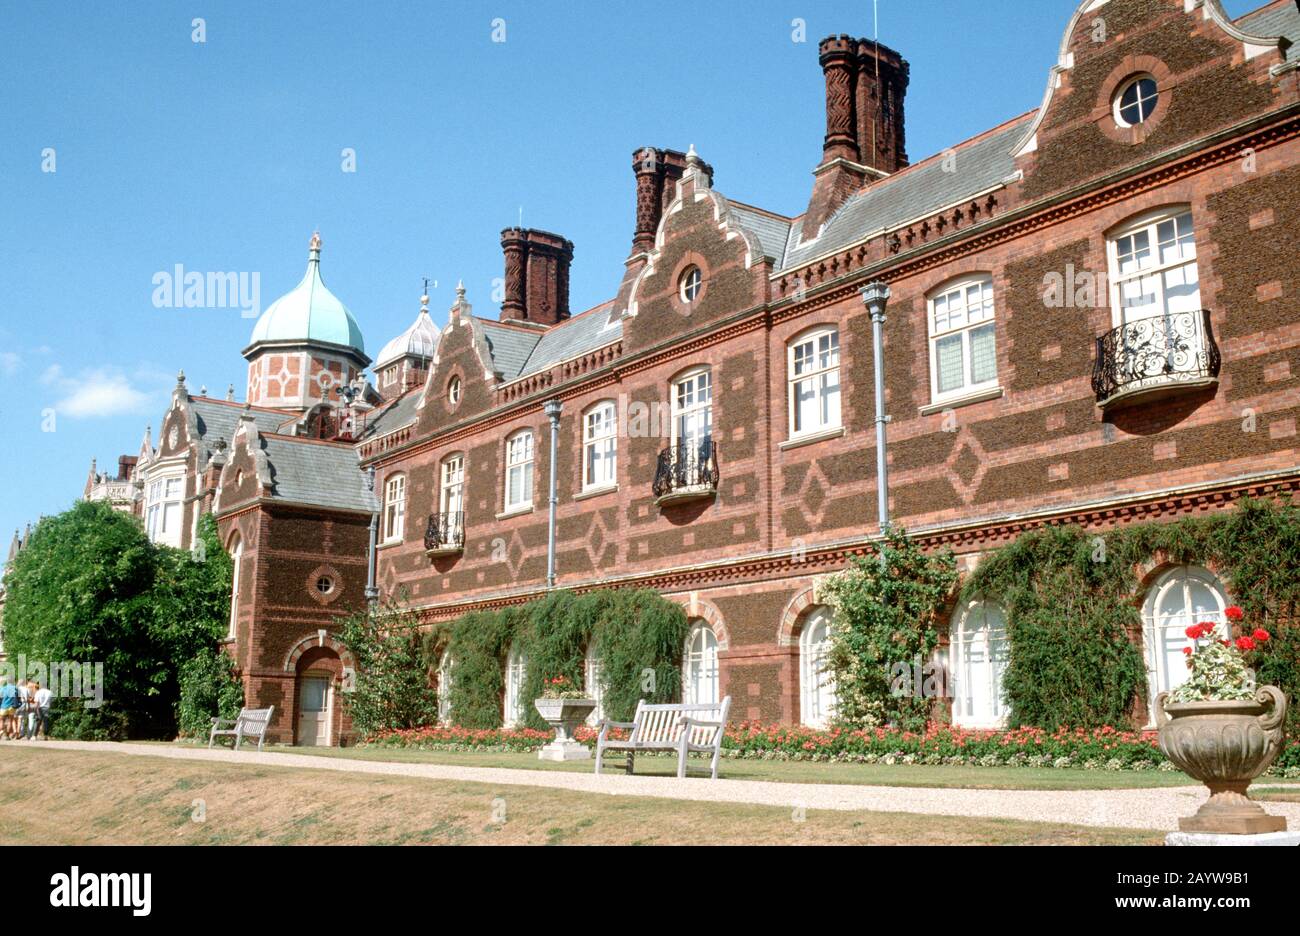 Home of HM Queen Elizabeth II Sandringham House, Norfolk, England. Stock Photo